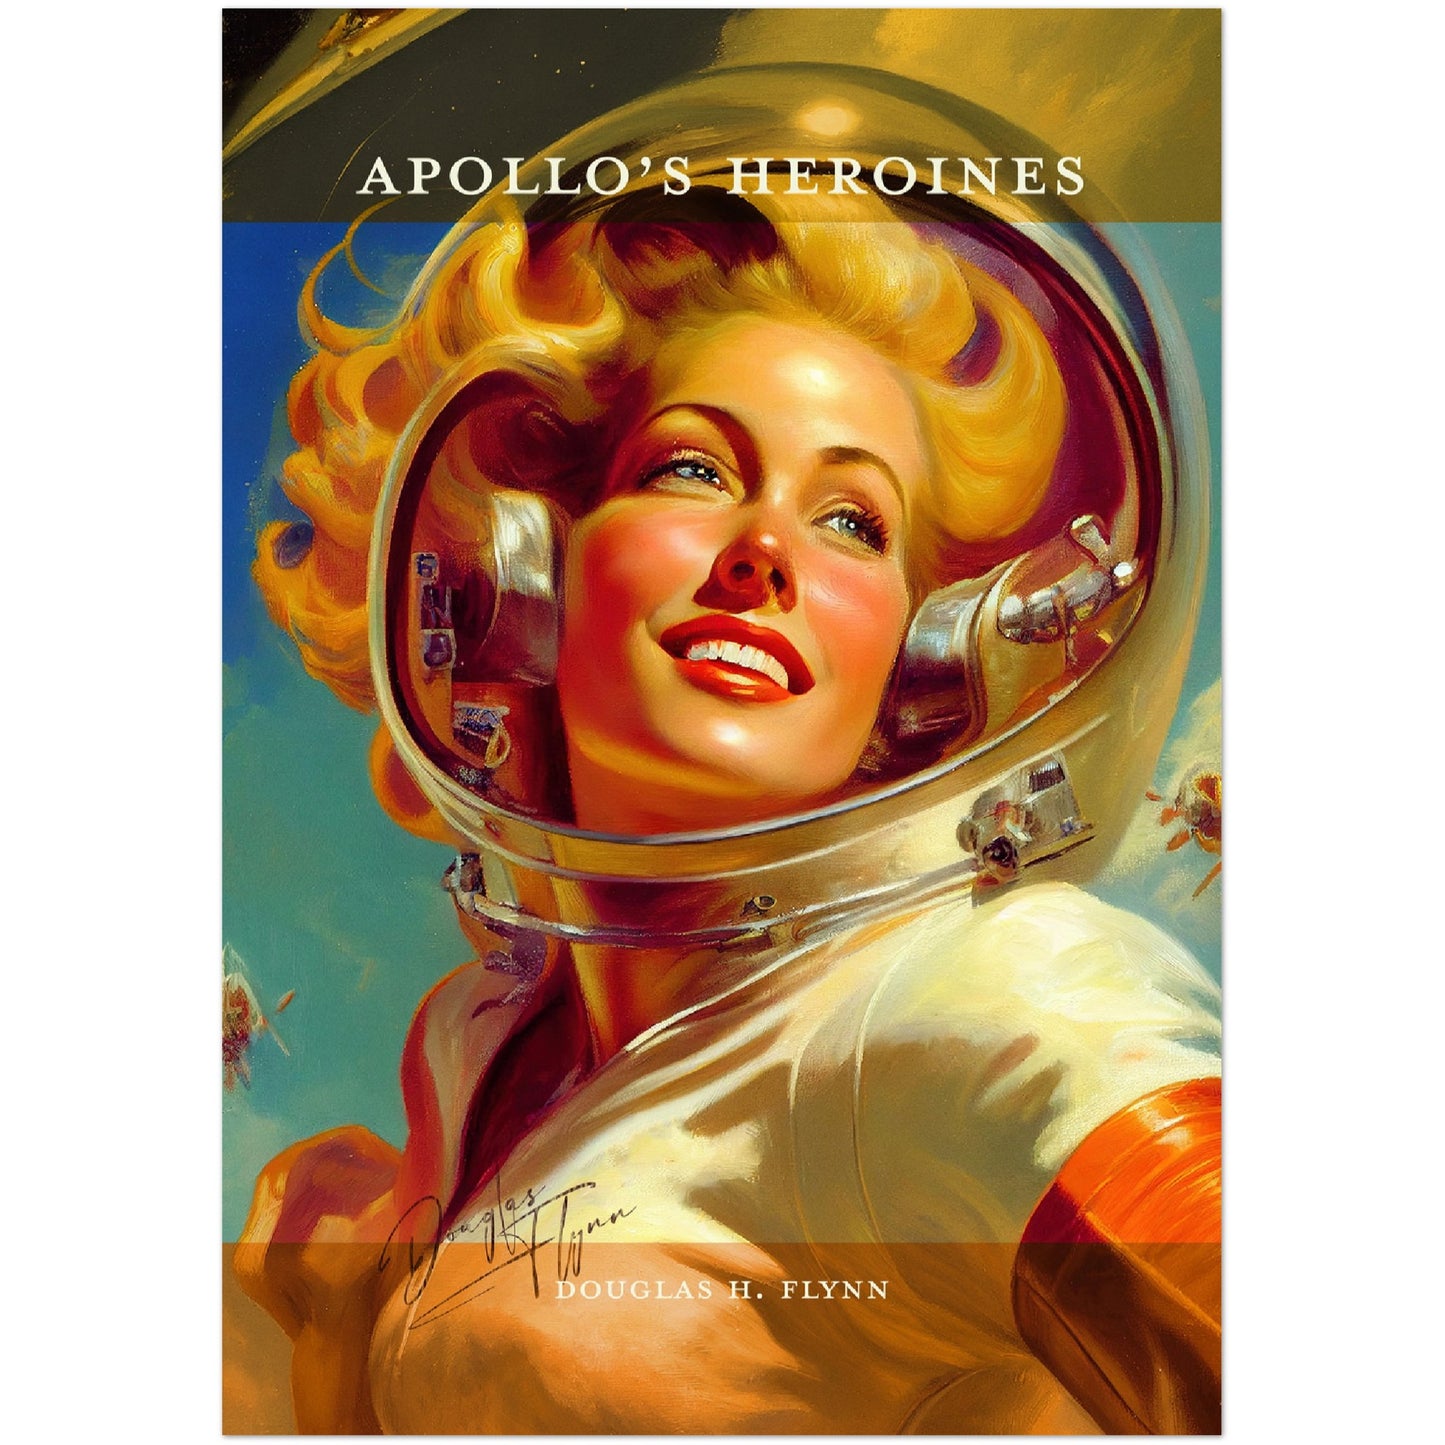 »Apollo's Heroines« merch poster